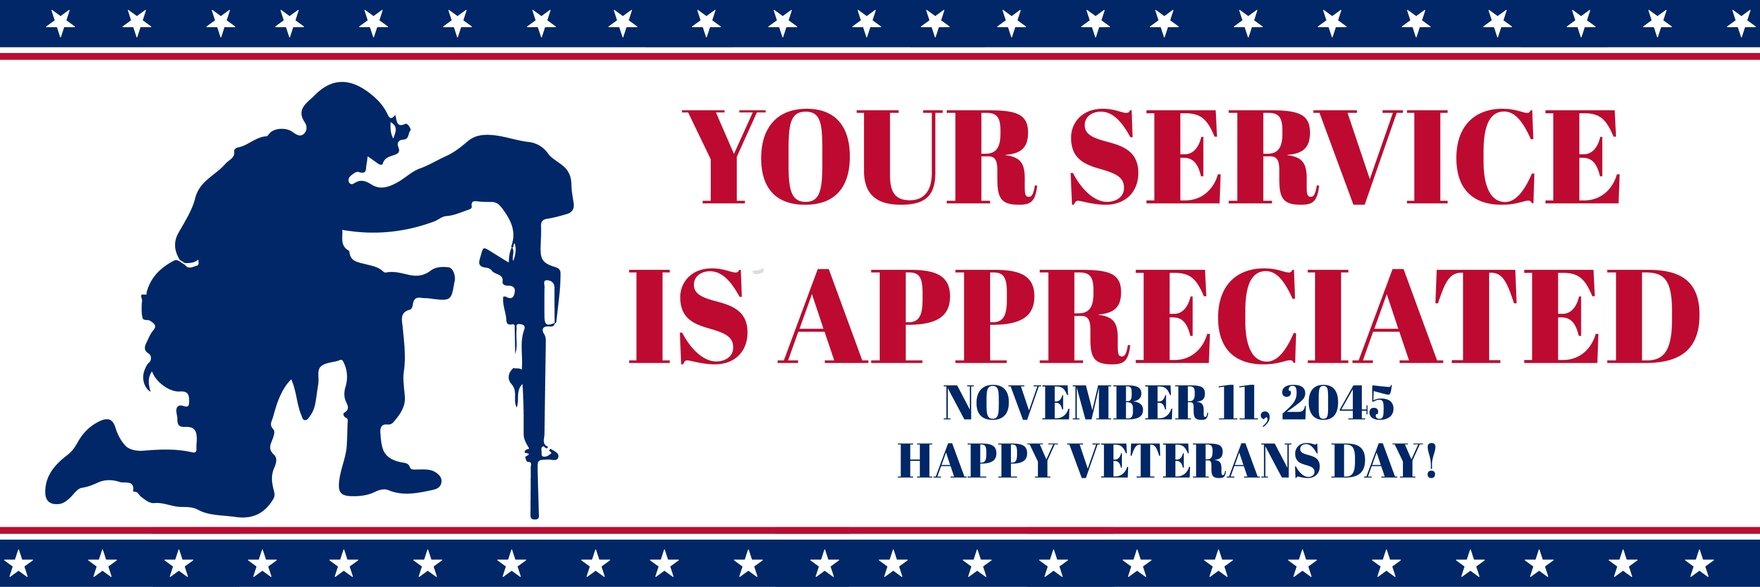 Veterans Day Facebook Ad Banner in Illustrator, PSD, EPS, SVG, JPG, PNG